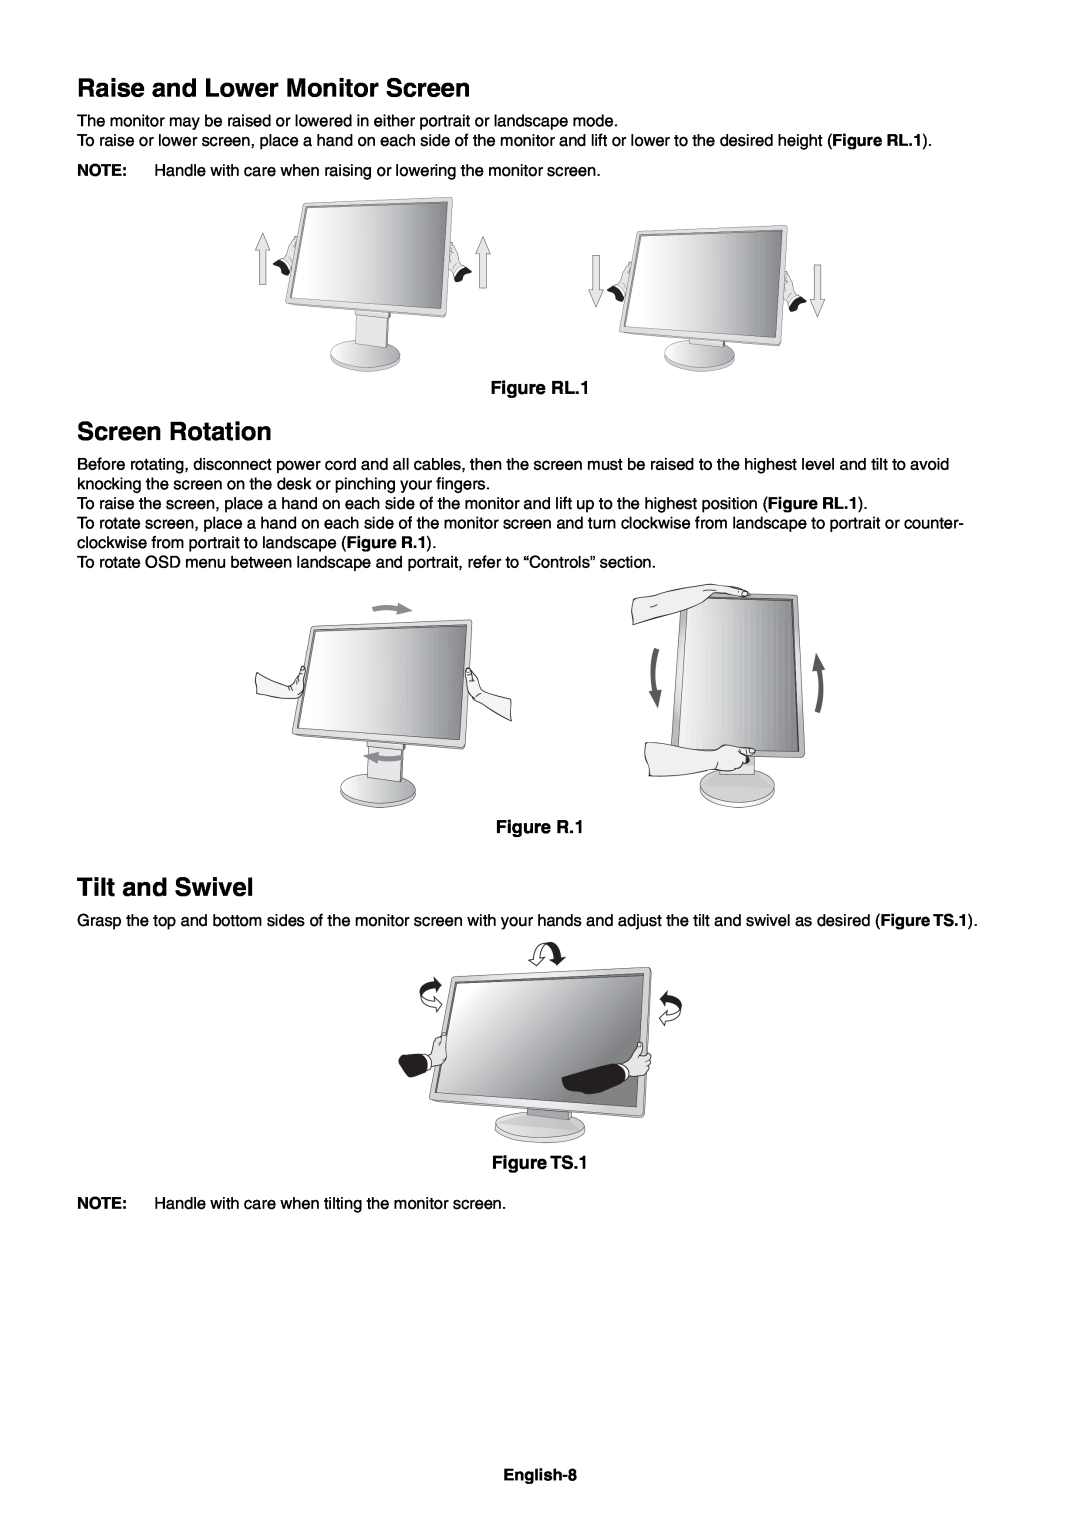 NEC EA244WMI-BK Raise and Lower Monitor Screen, Screen Rotation, Tilt and Swivel, Figure RL.1, Figure R.1, Figure TS.1 